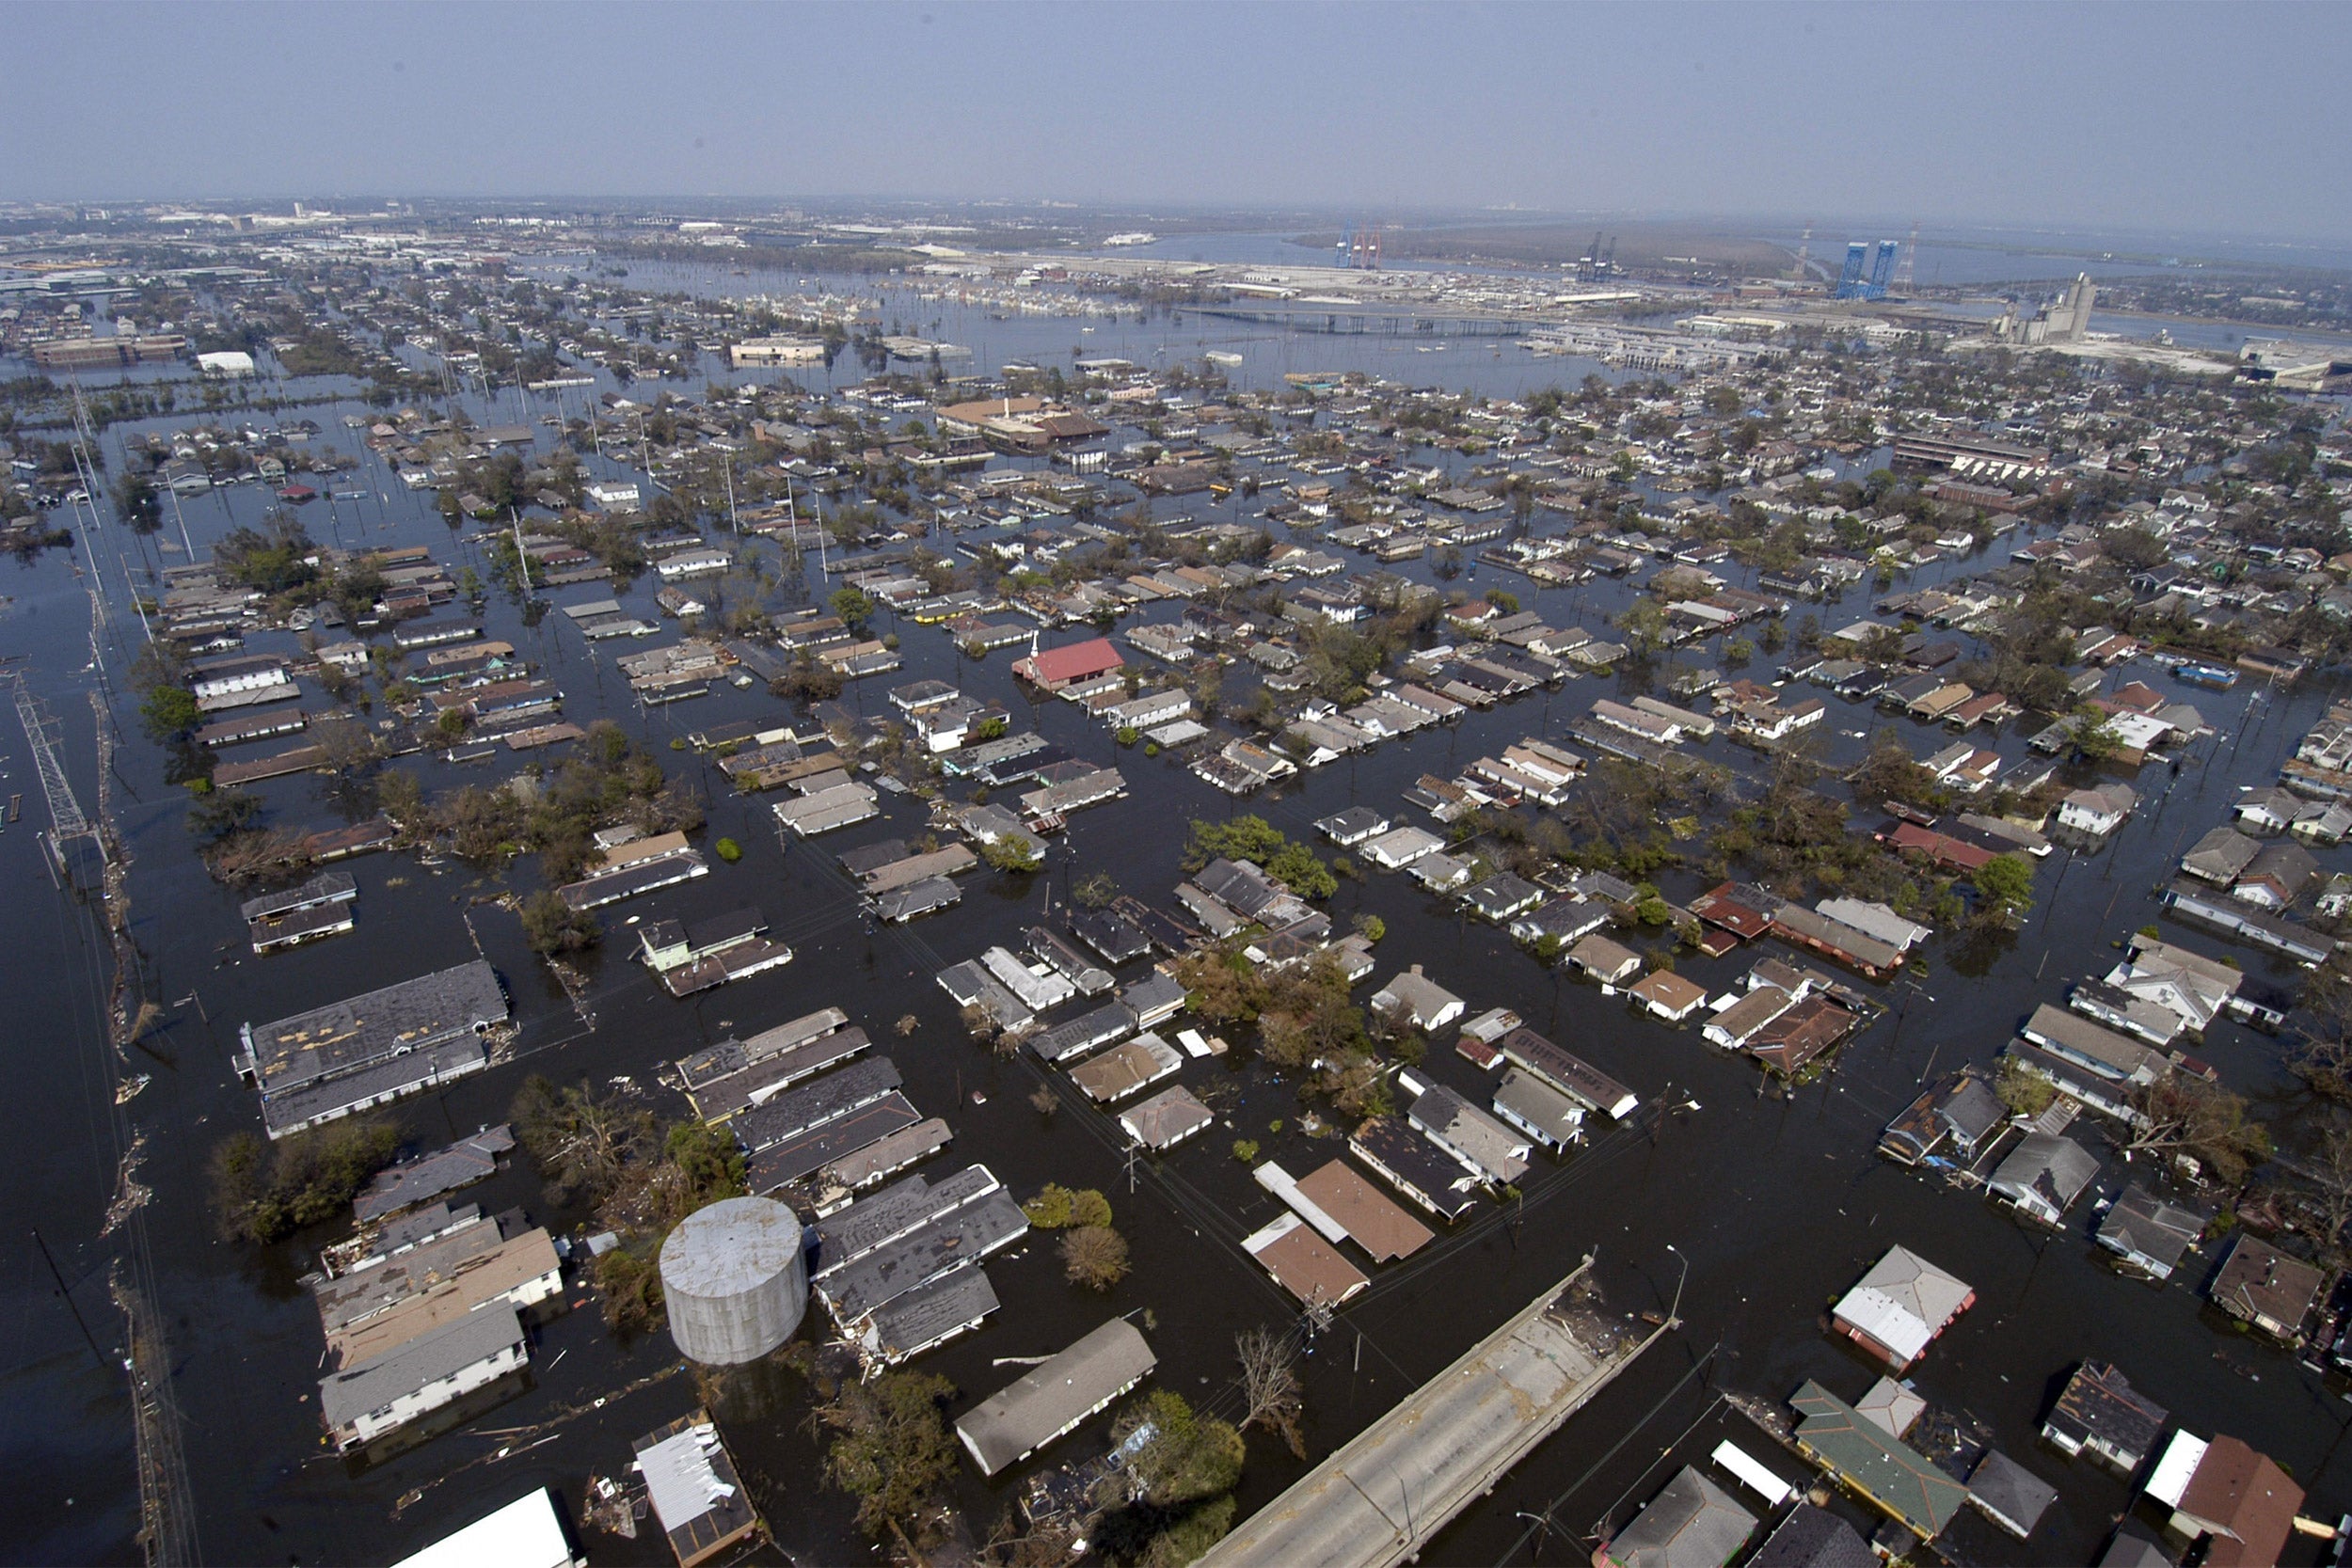 New Orleans following Hurricane Katrina